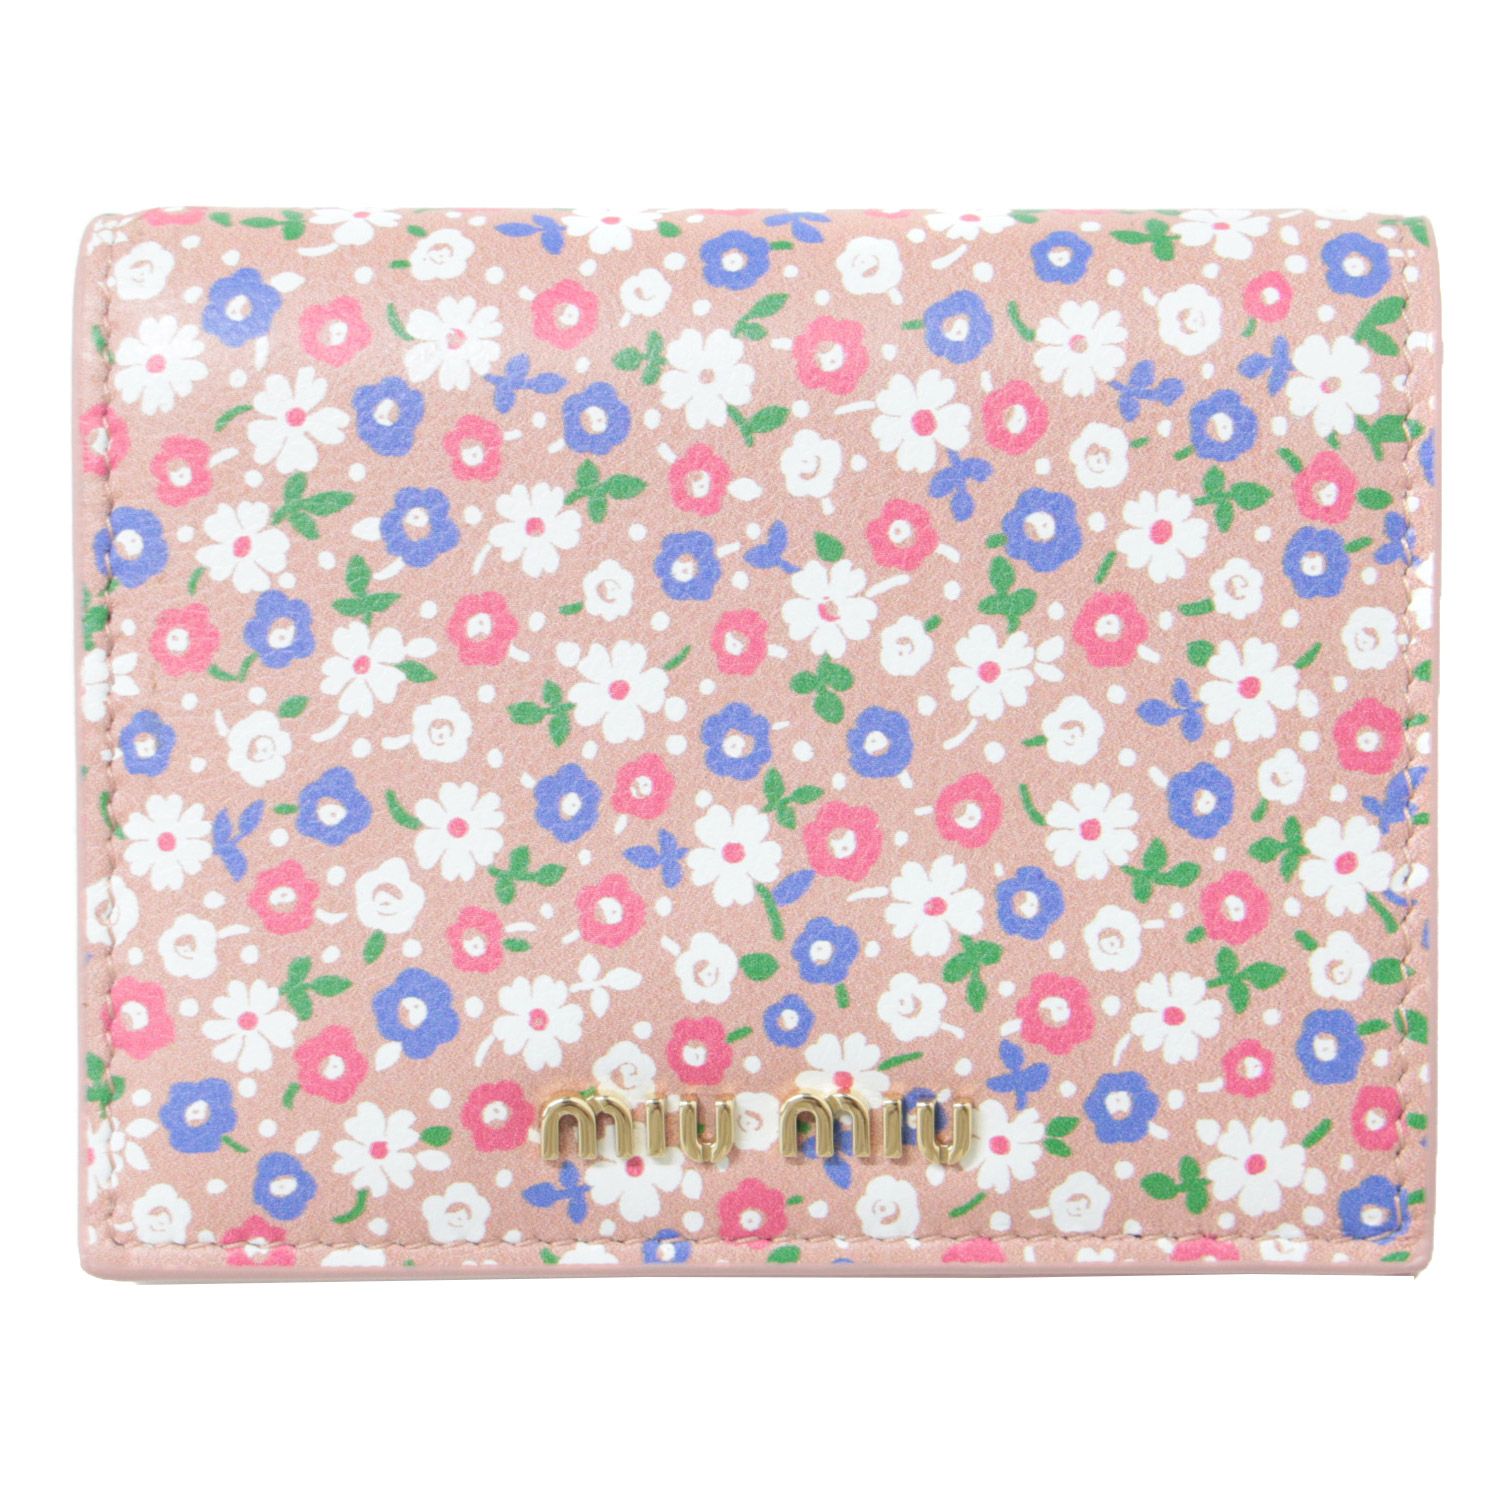 miumiu flower wallet.